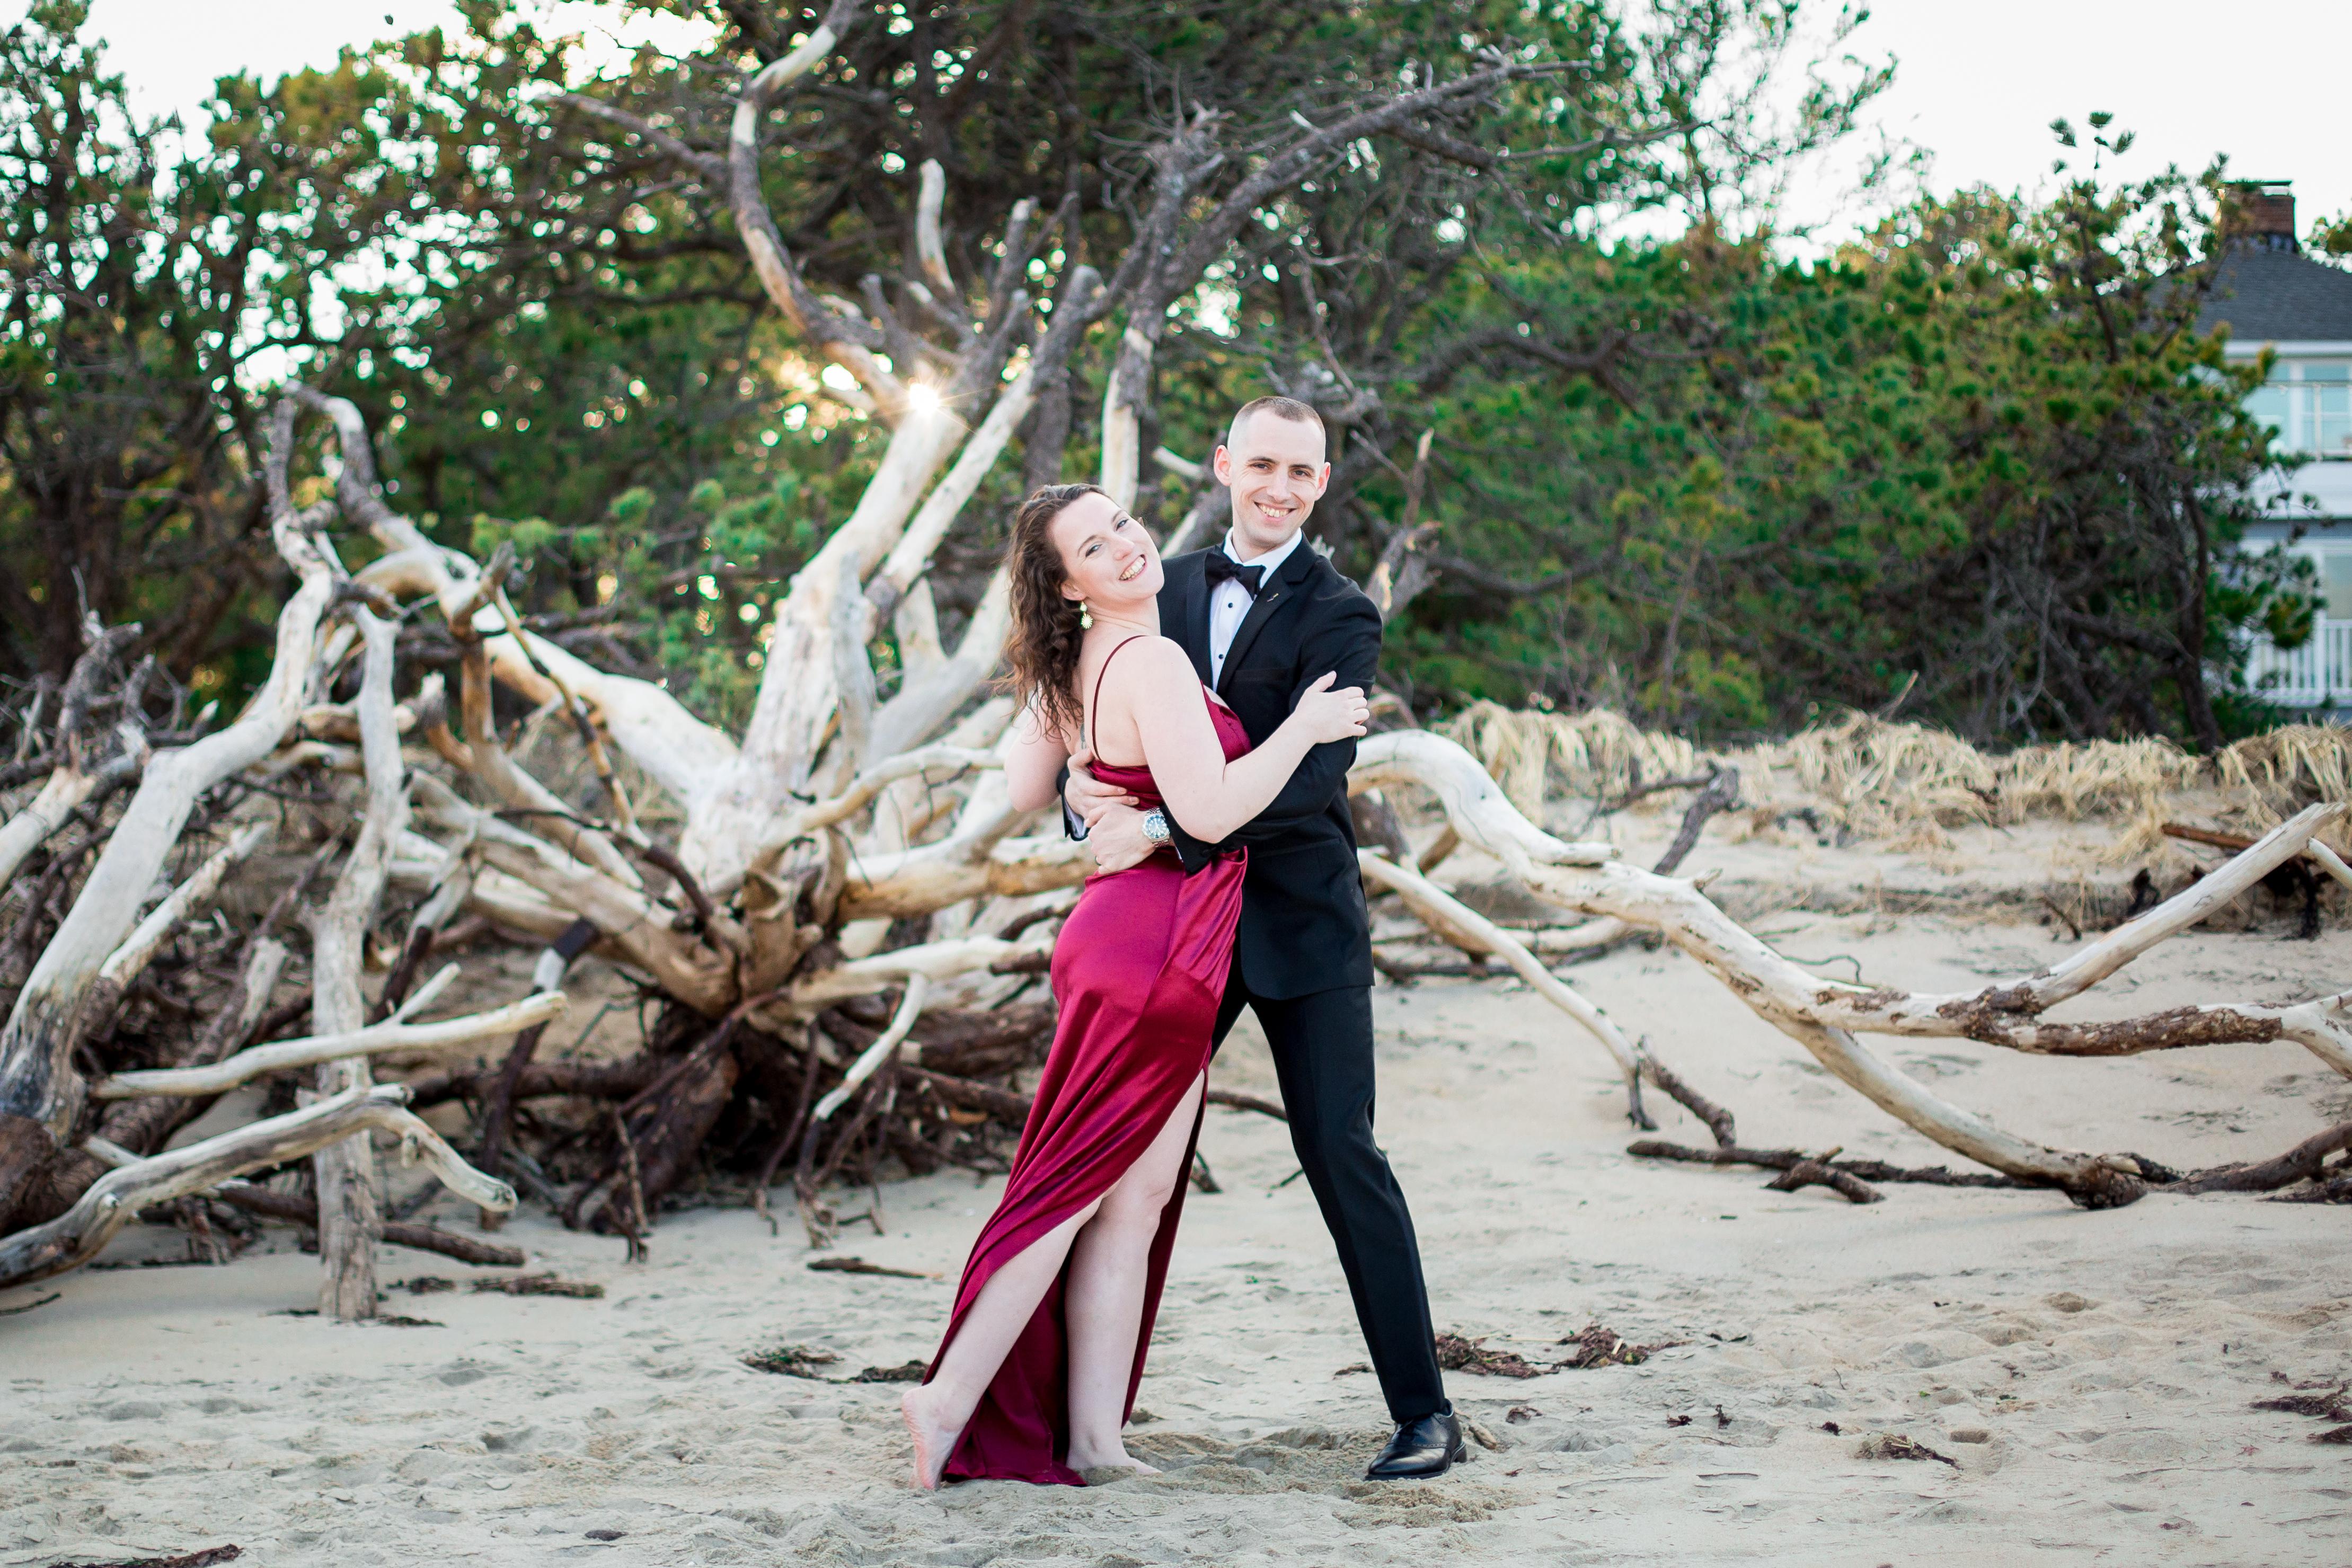 The Wedding Website of Holly Anne Snyder and Nicholas G. B. Enzmann